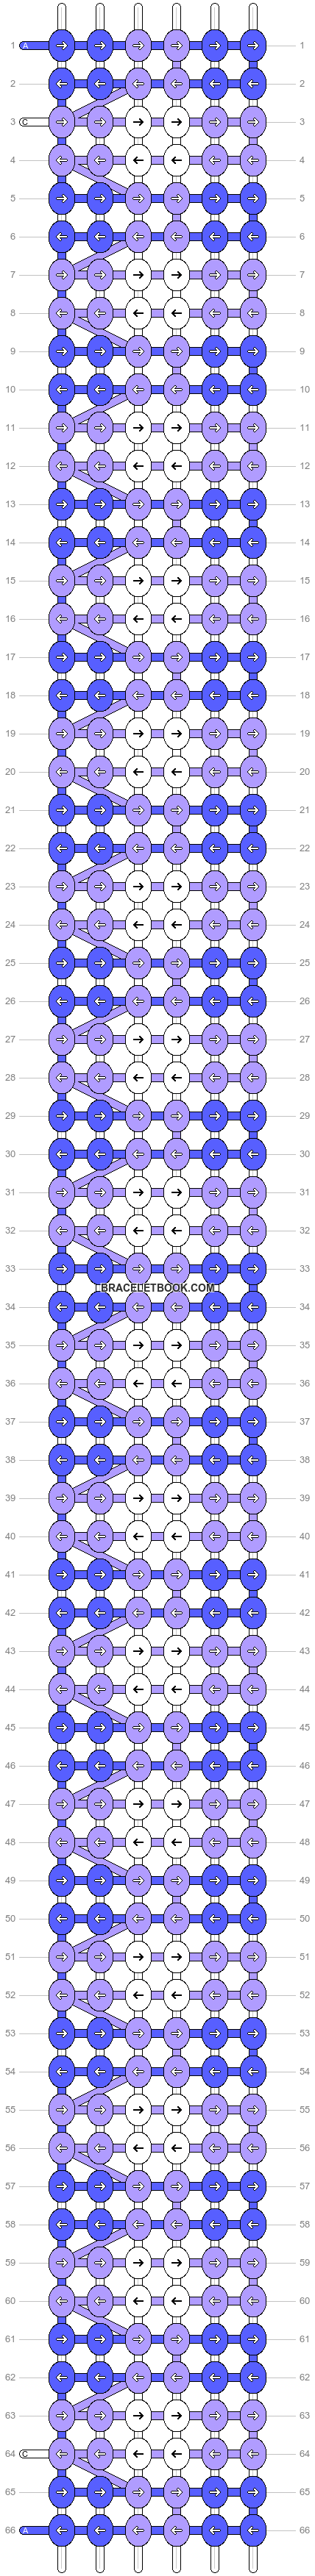 Alpha pattern #80755 variation #146826 pattern